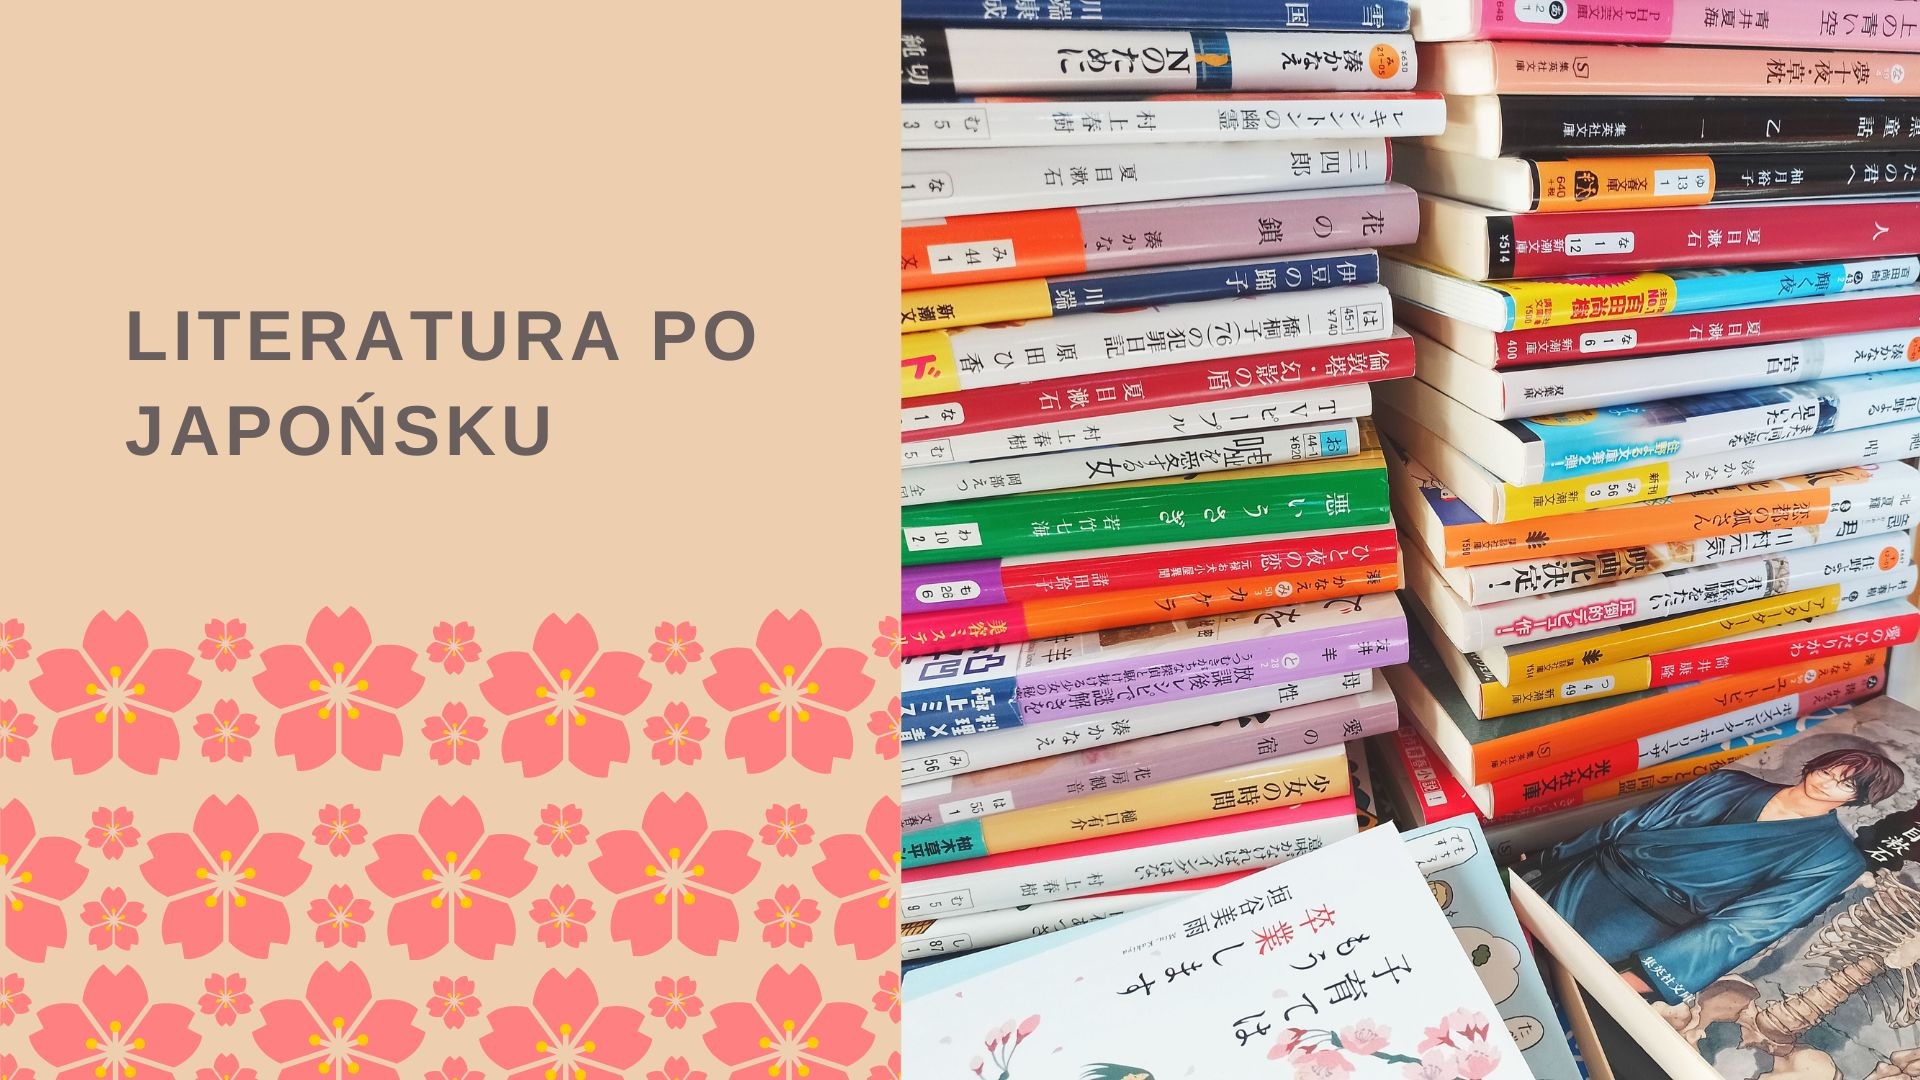 Literatura po japońsku